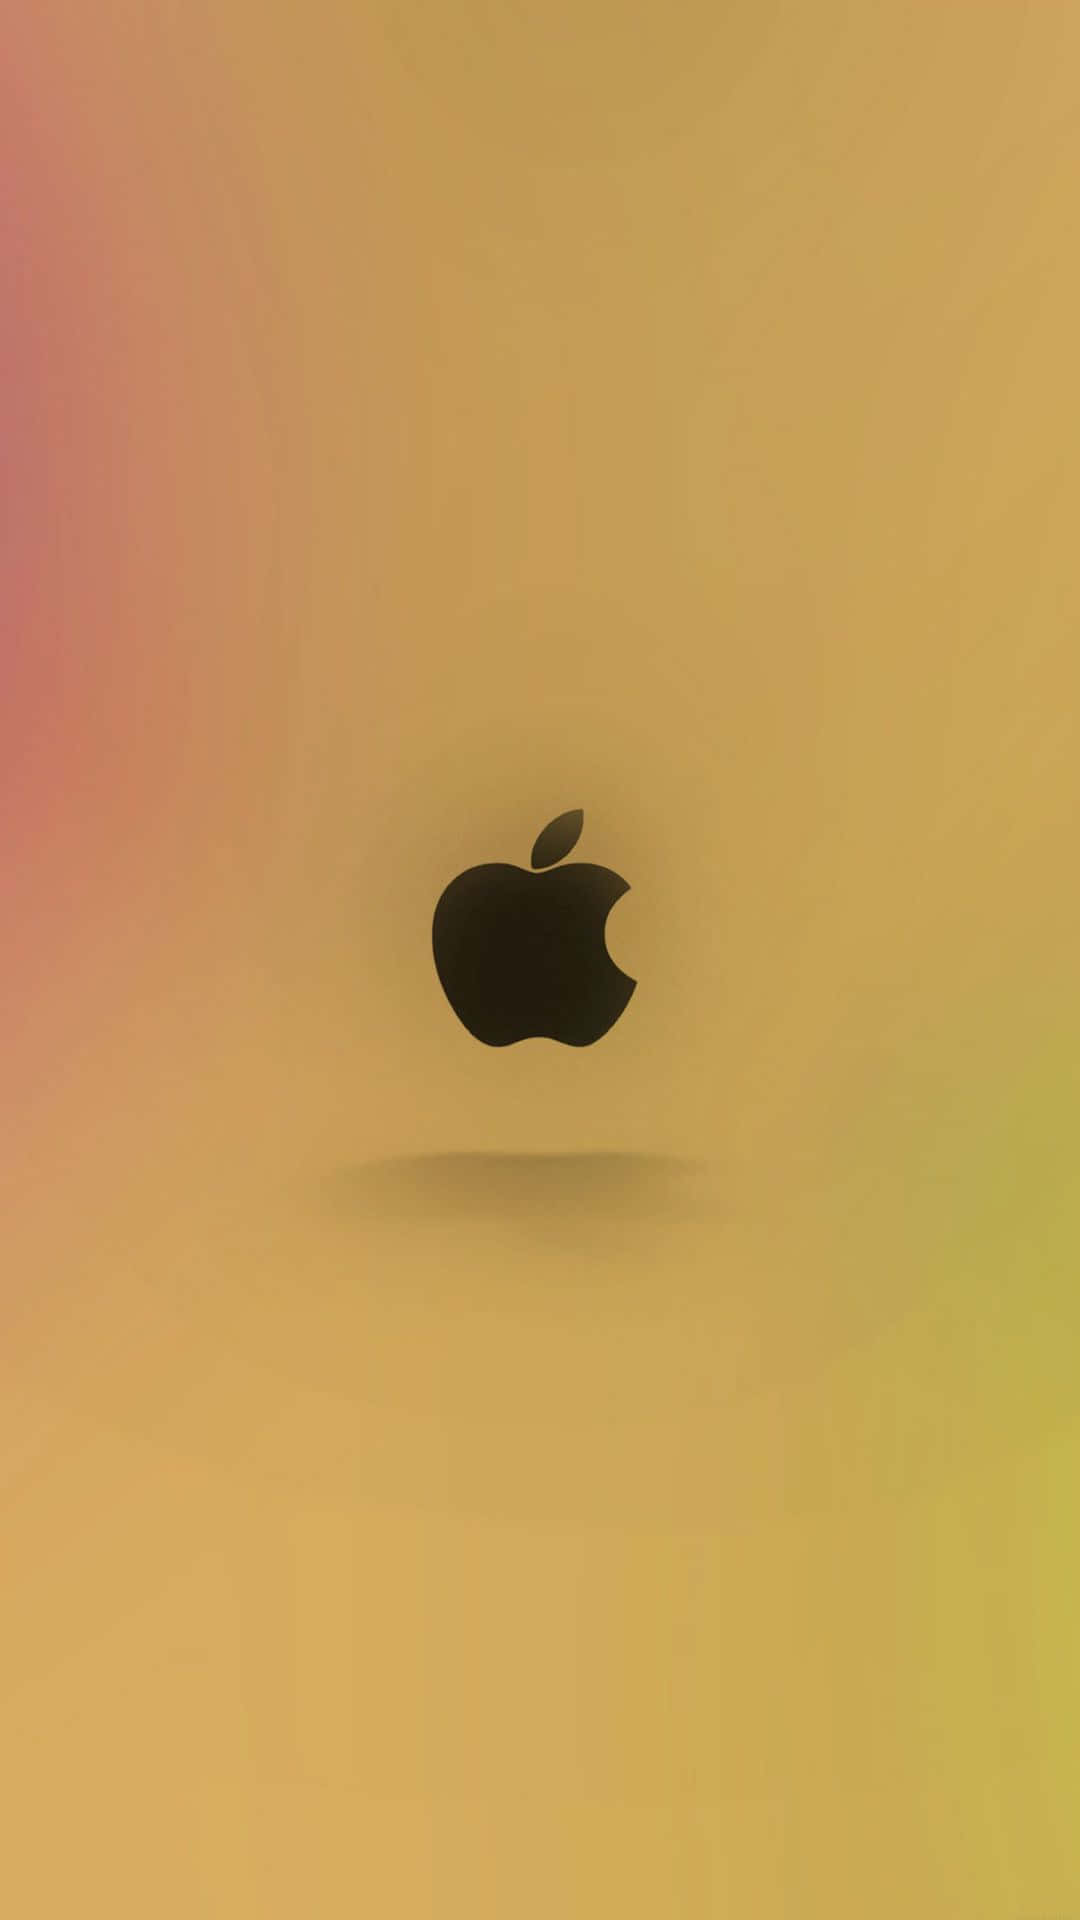 Caption: Stunning Apple Logo Design On A Grayscale Texture.